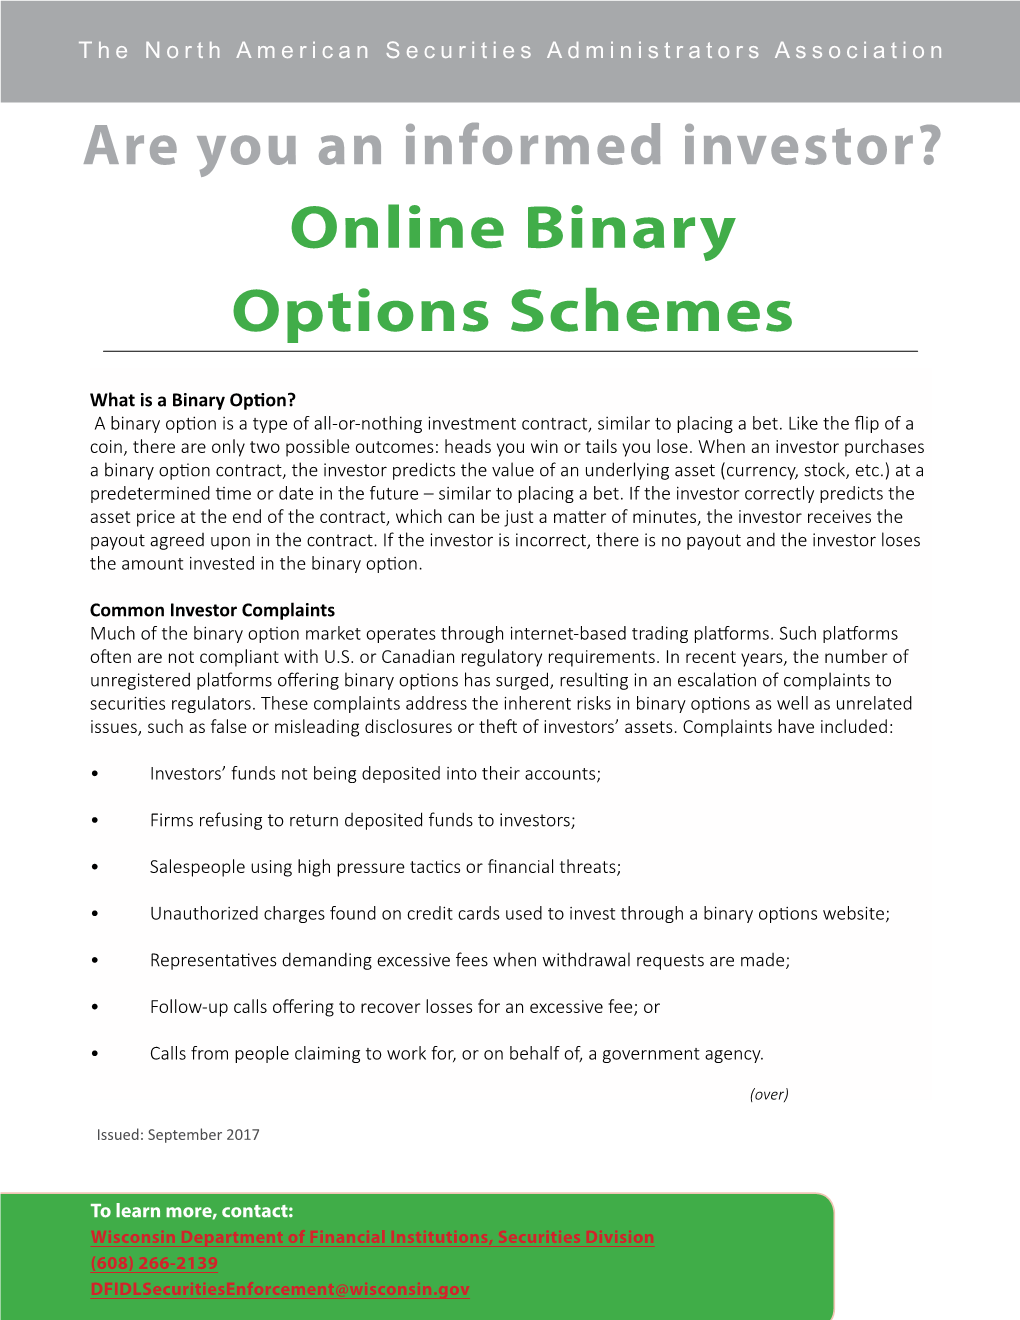 Online Binary Options Schemes